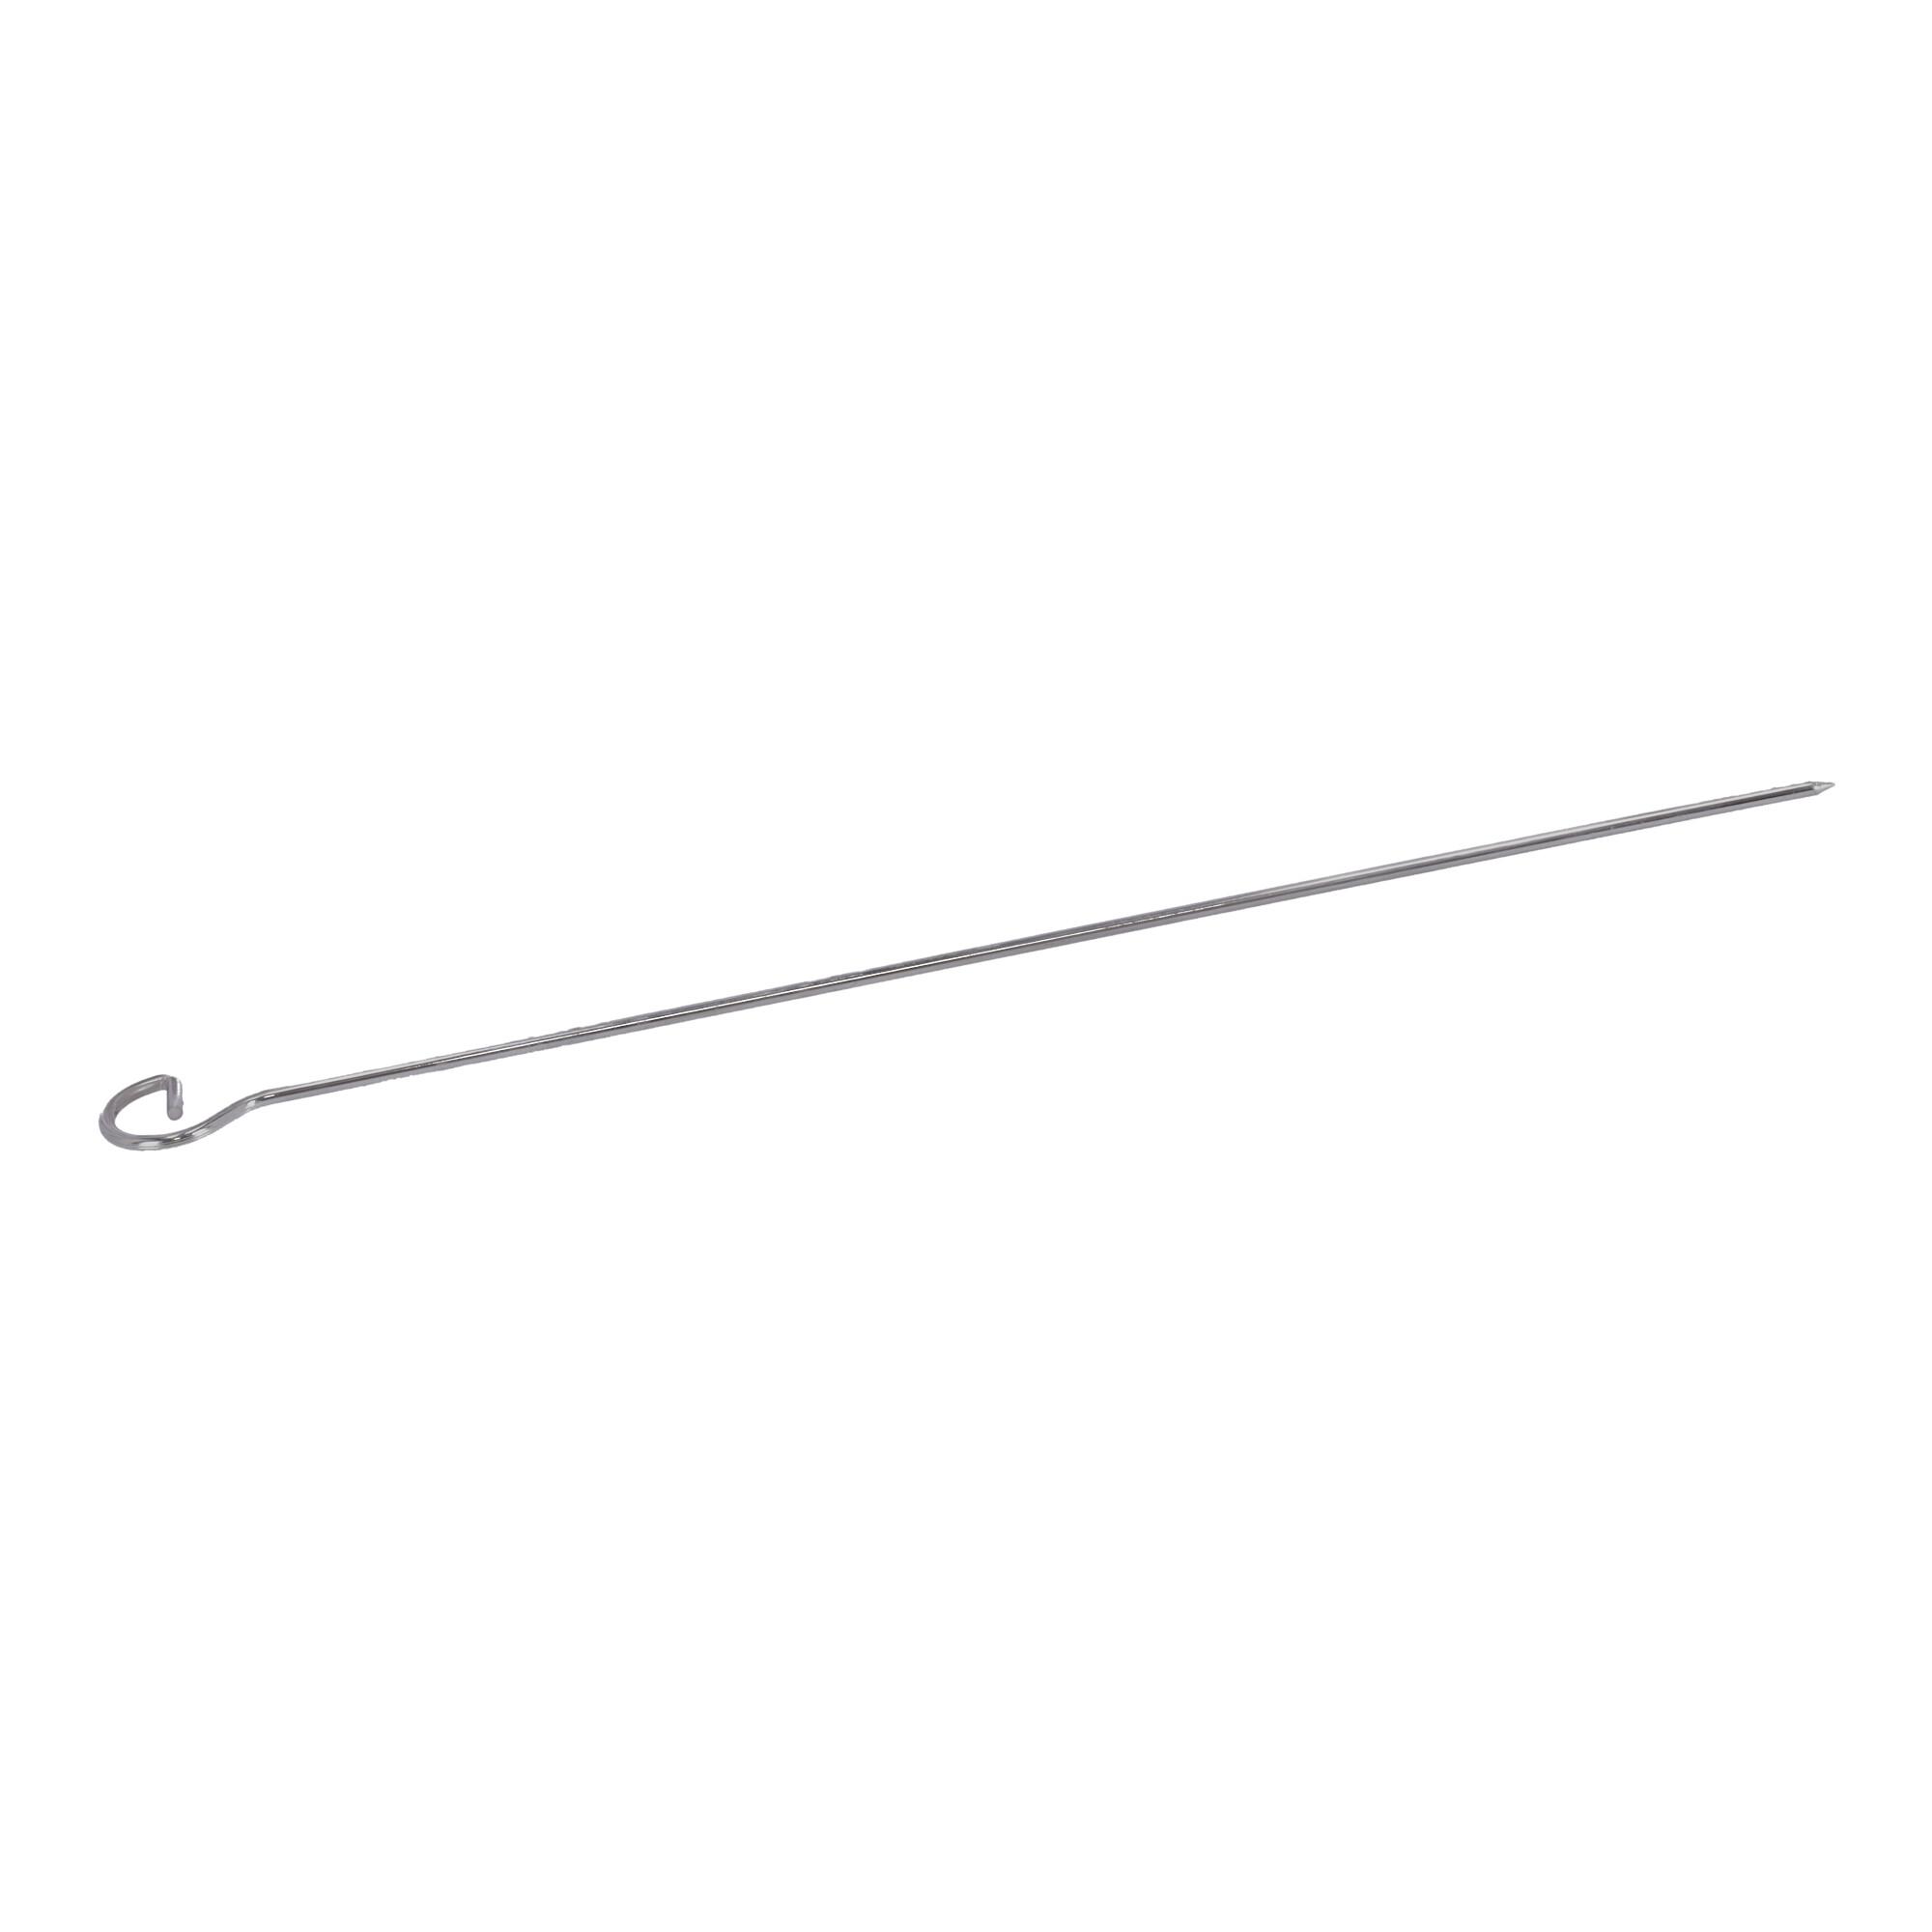 Single skewer needle, 30 cm